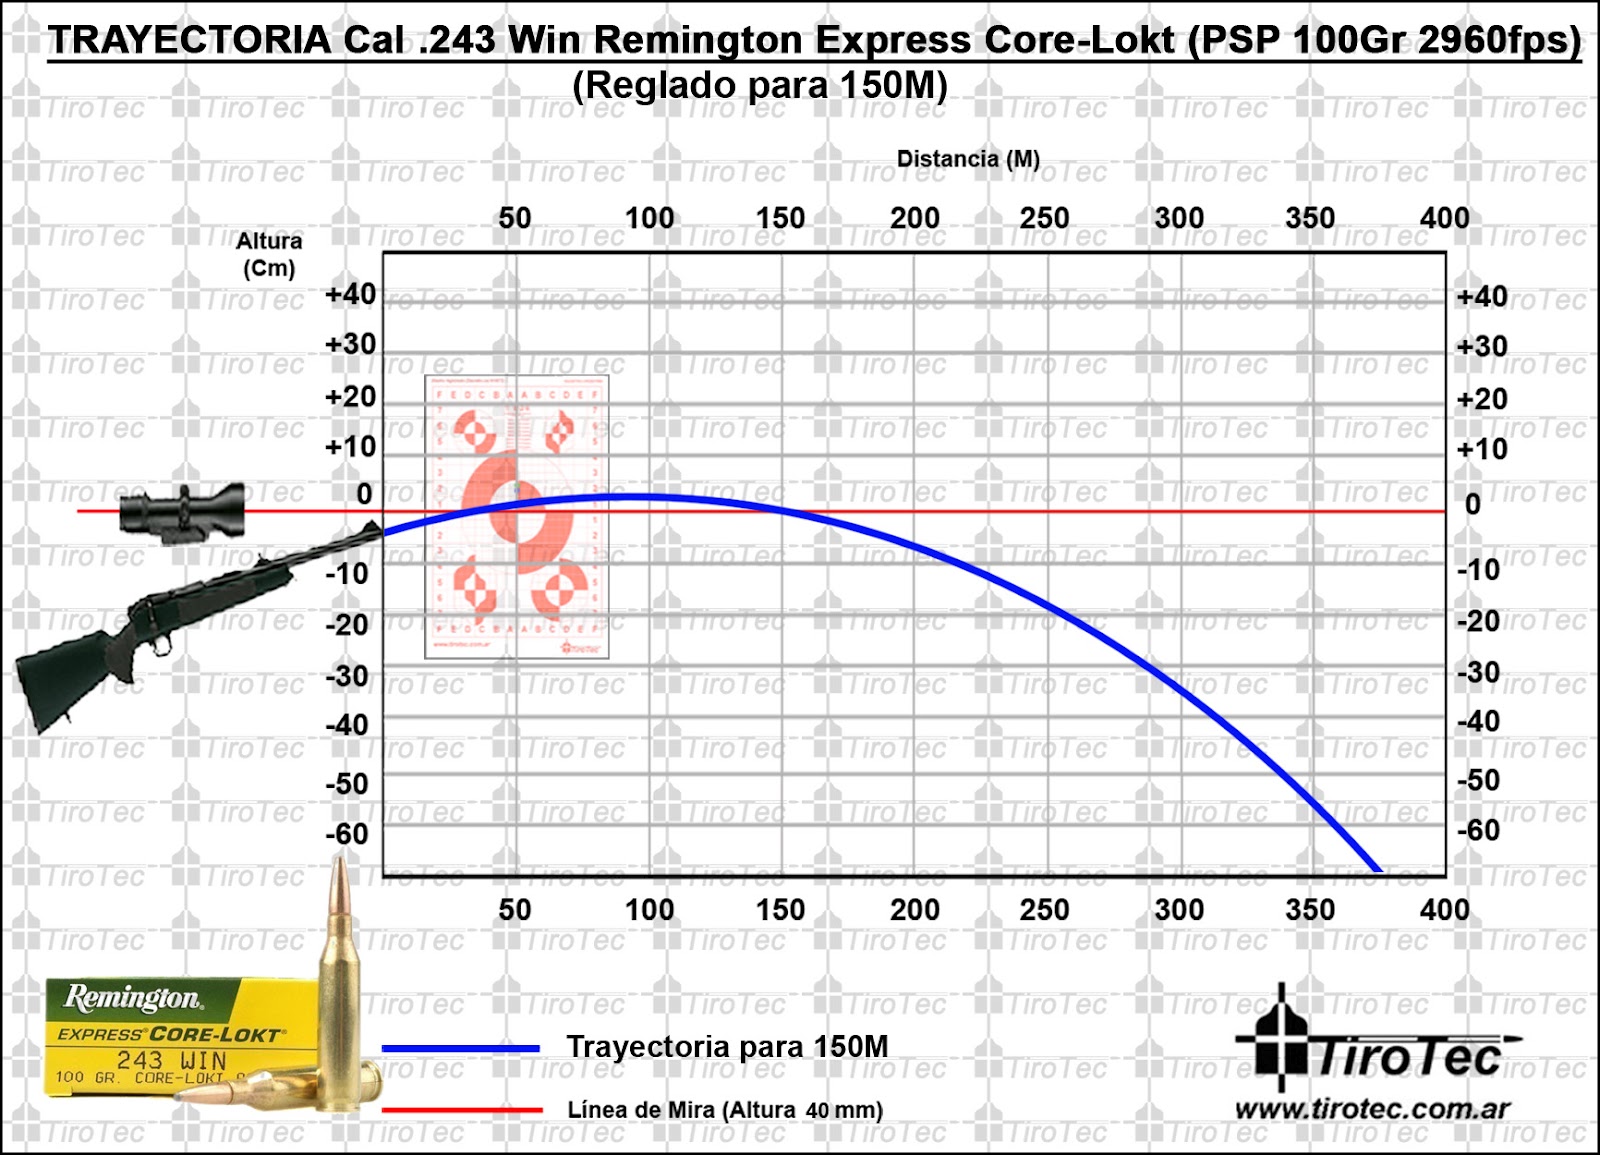 Tirotec: Calibre 243 Win Remington Express 100 Grain Core-Lokt PSP